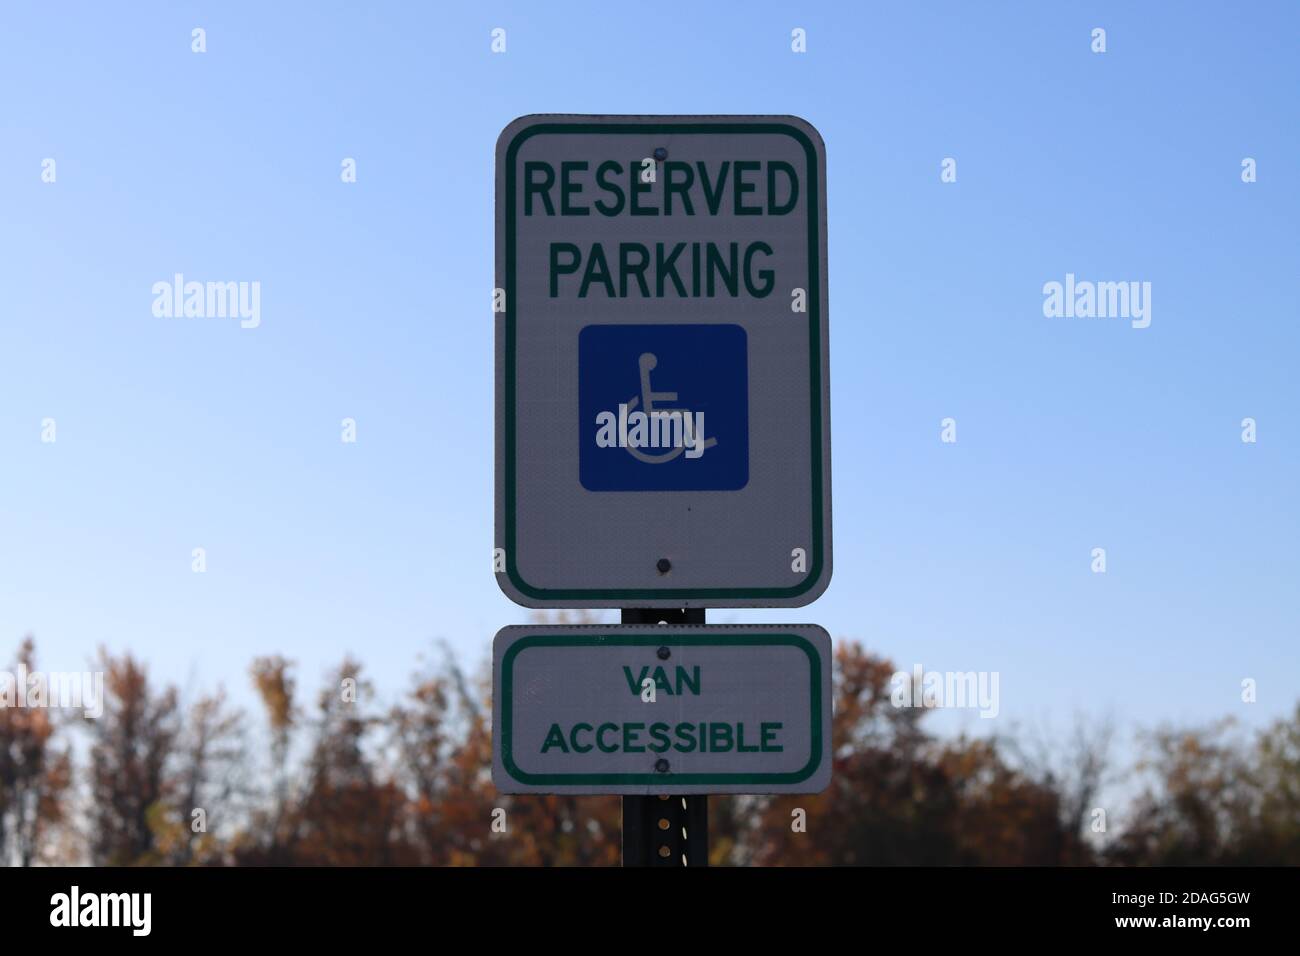 A handicap parking sign Stock Photo